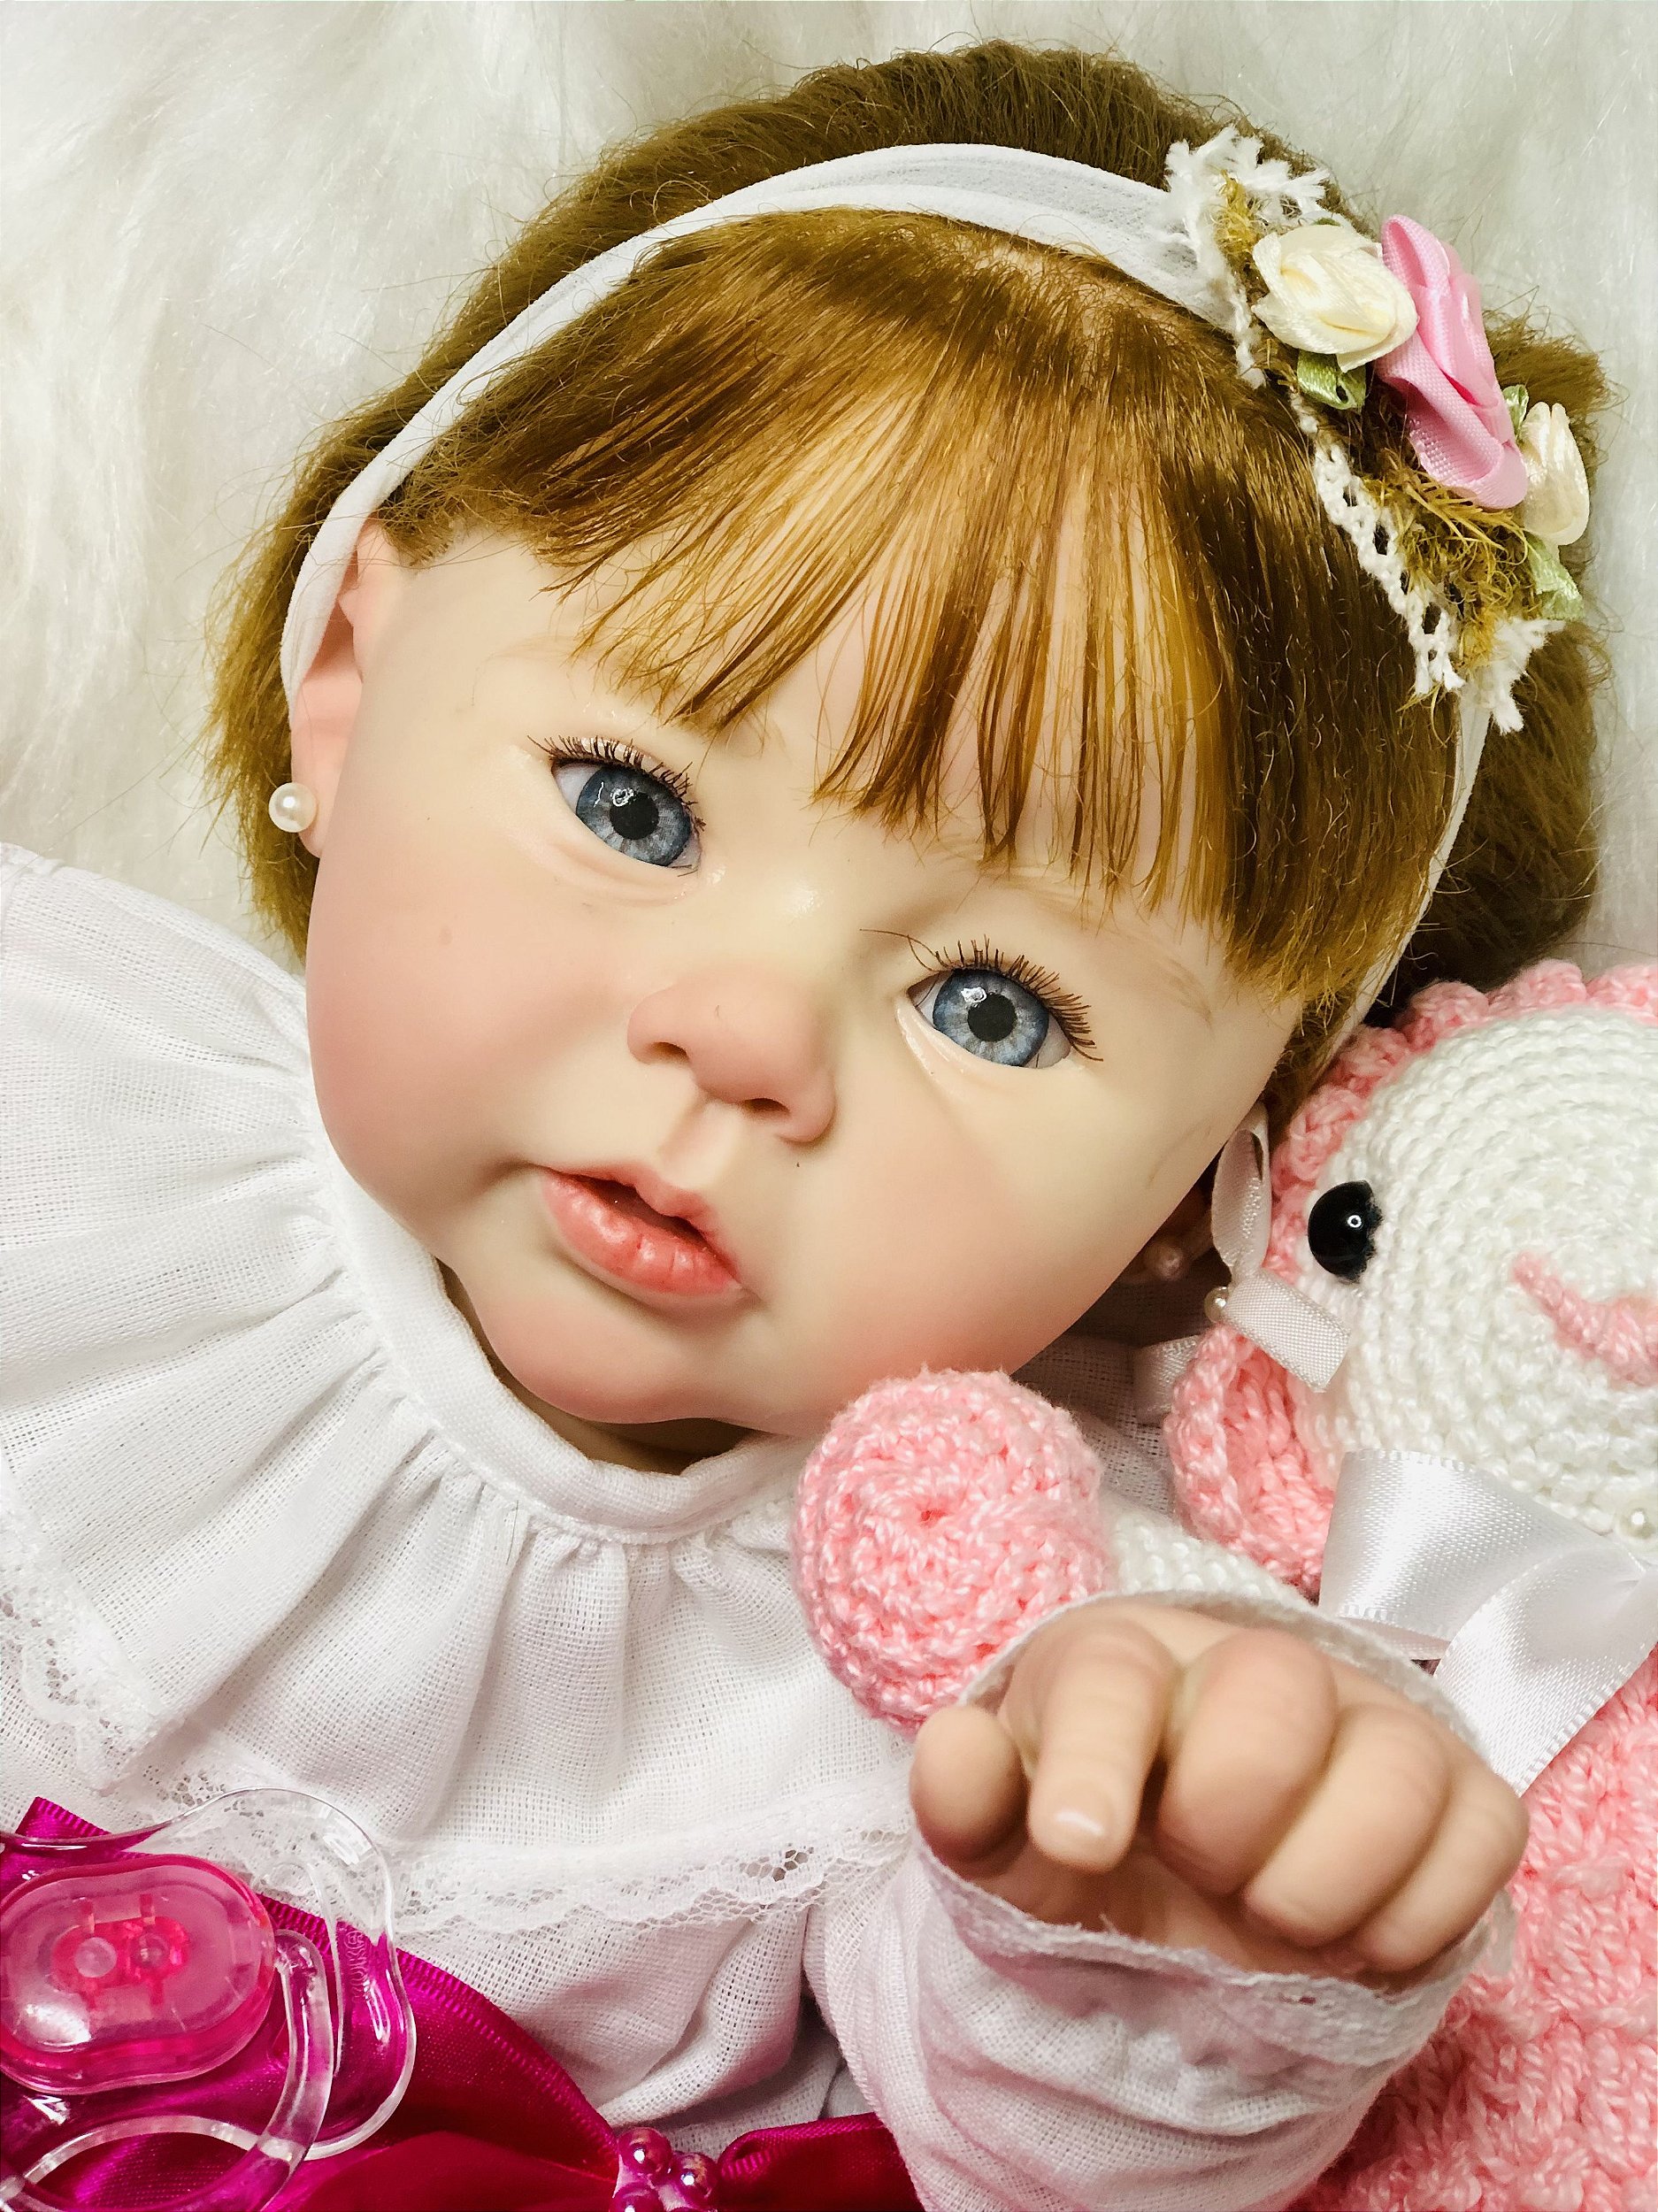 Boneca Bebê Reborn 48cm Menina Corpo De Silicone sólido Realista e